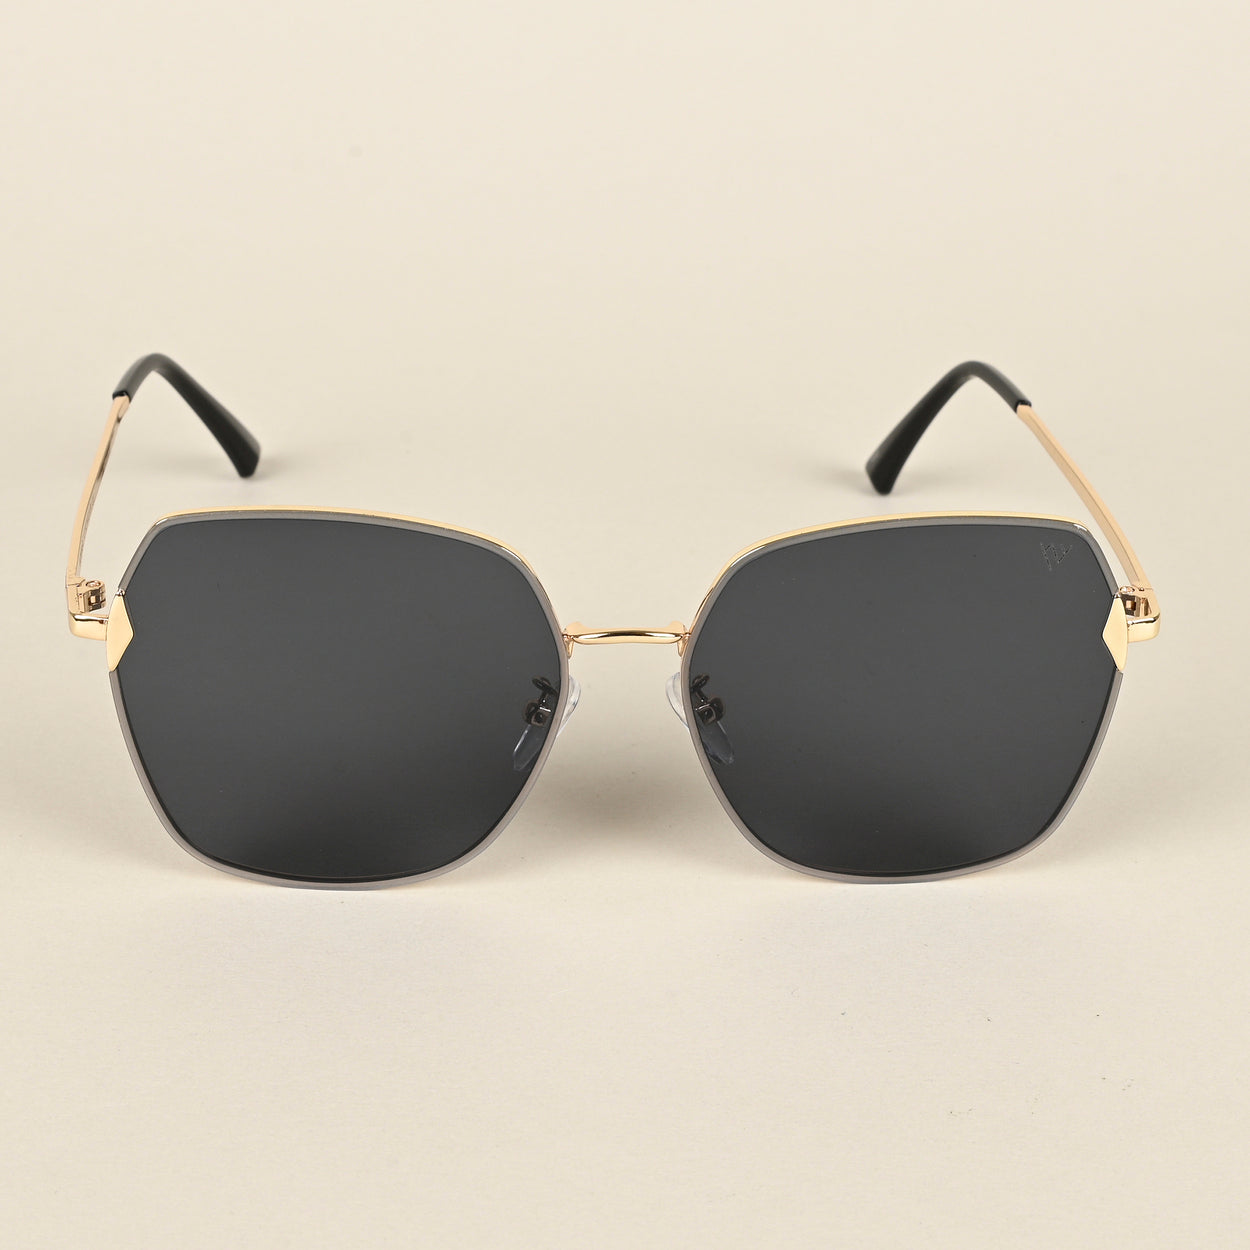 Voyage Black Oversize Sunglasses for Women - MG4326